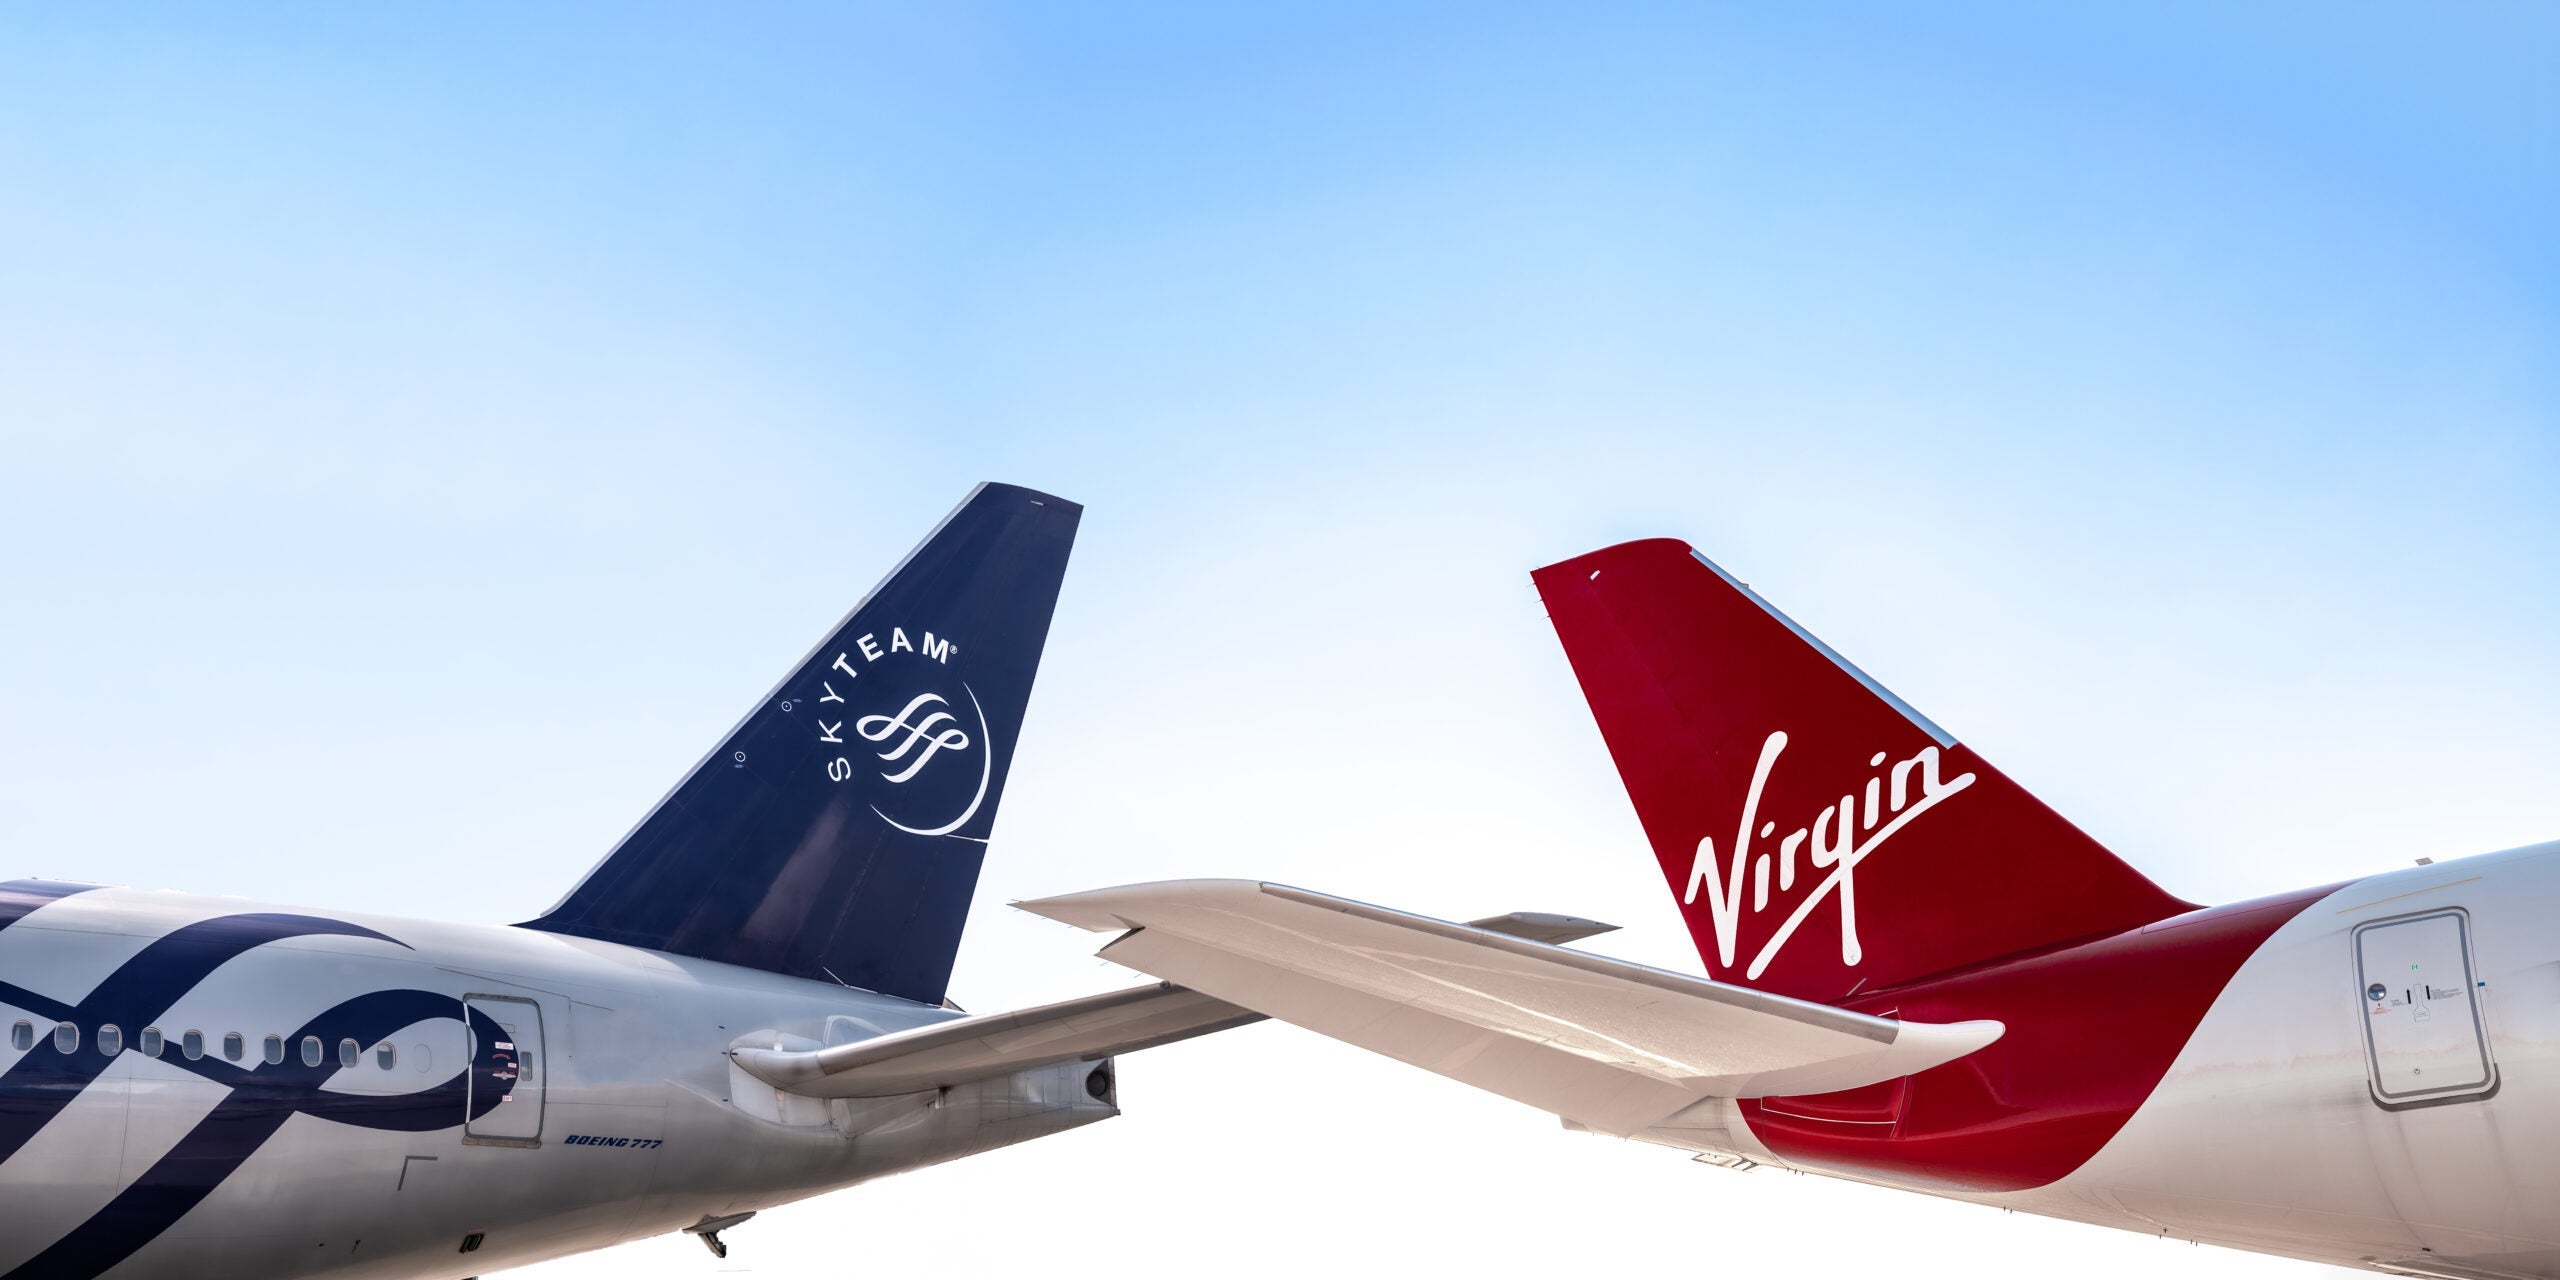 Virgin Atlantic will join the SkyTeam alliance in January 2023.